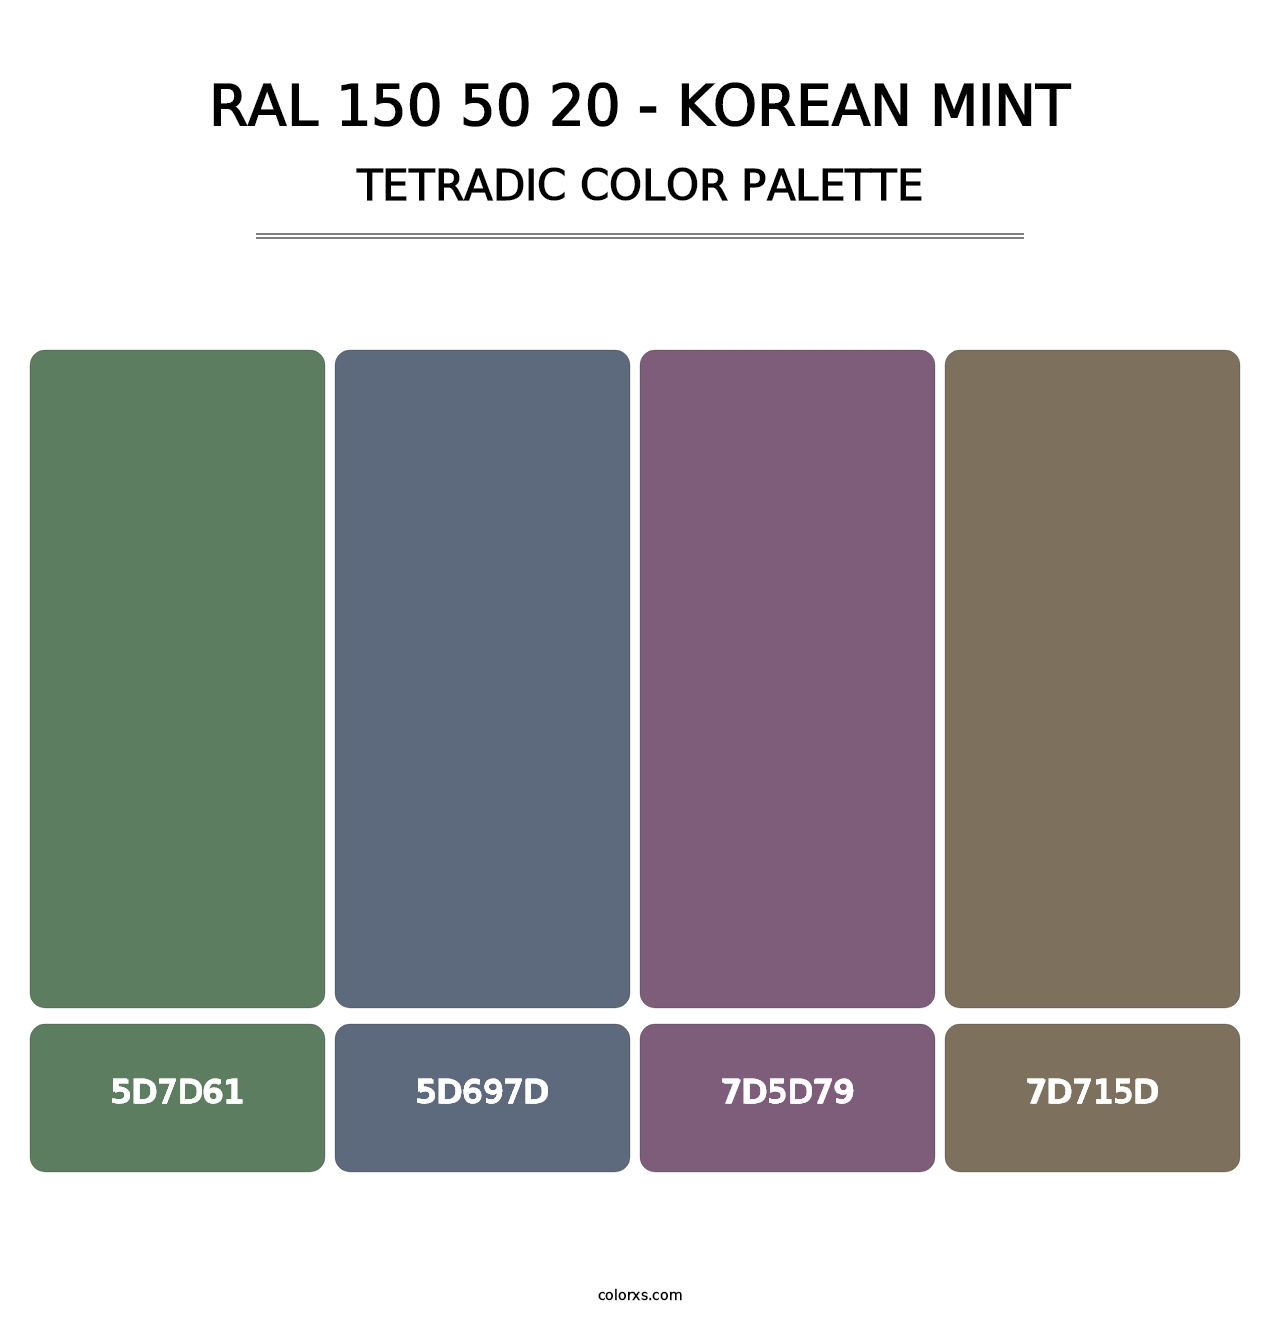 RAL 150 50 20 - Korean Mint - Tetradic Color Palette